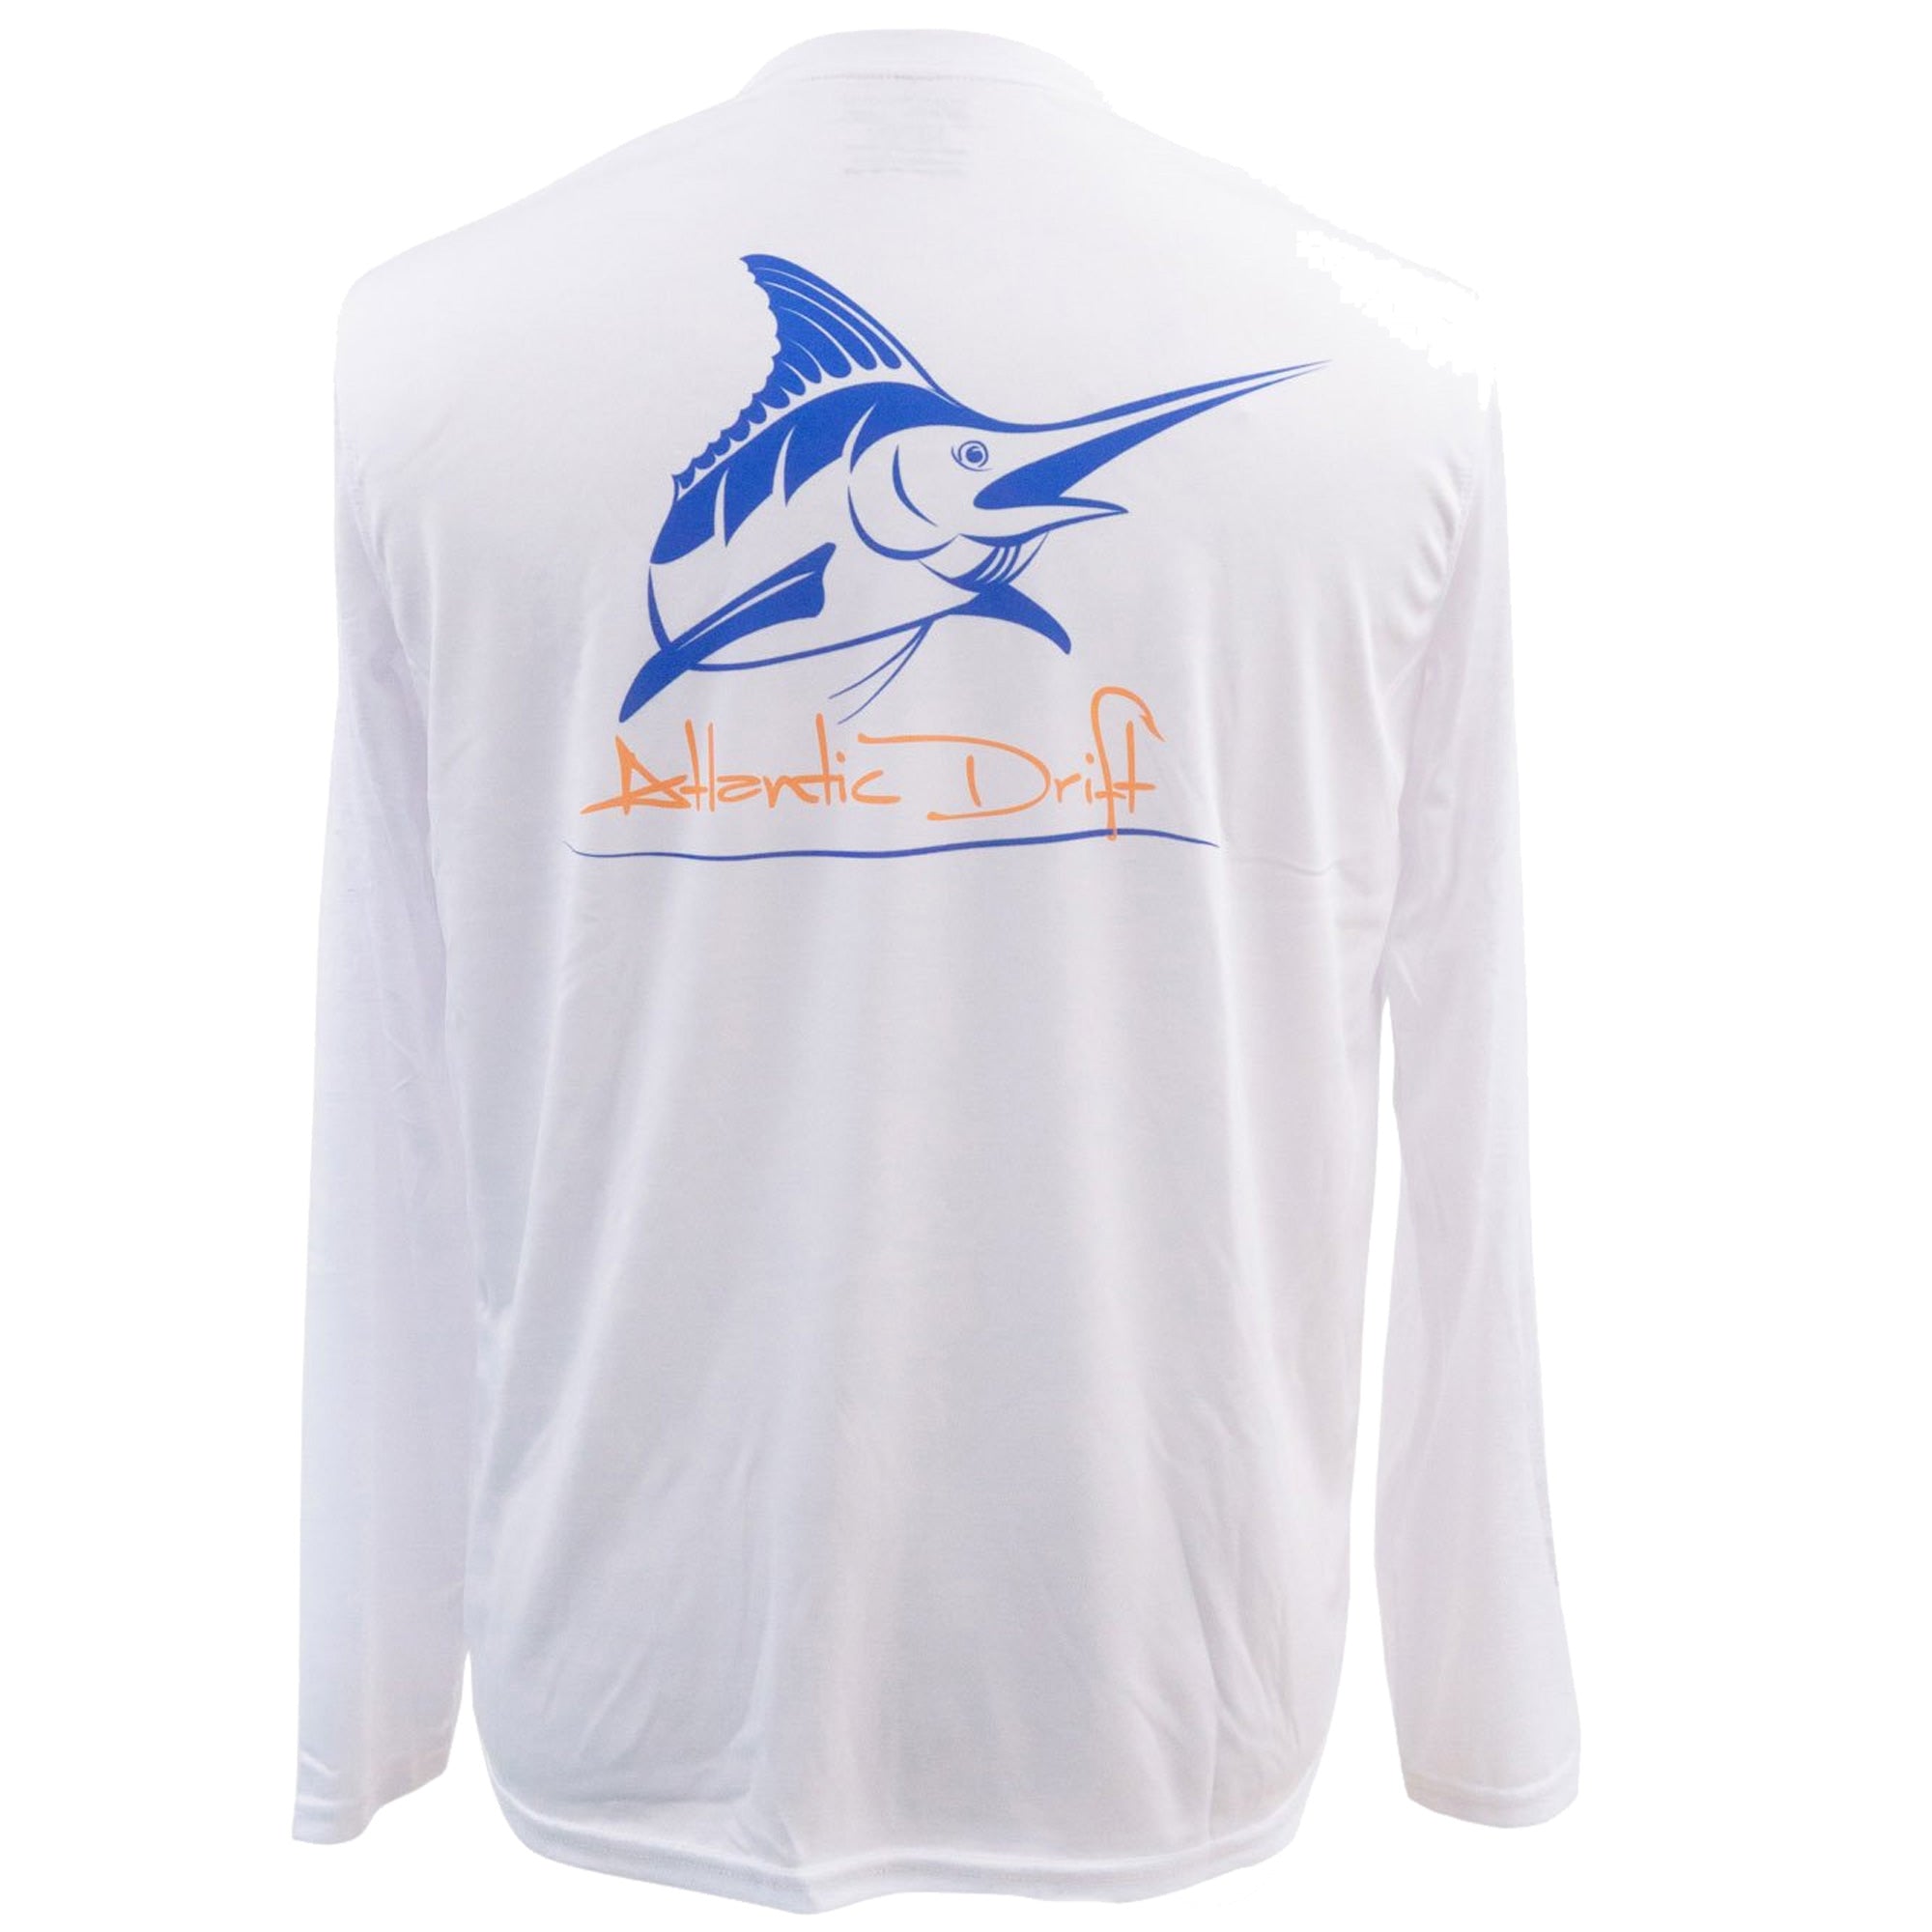 Tarpon Men's Fishing T-shirt Long Sleeves Saltloony UPF 50 Dri-fit 